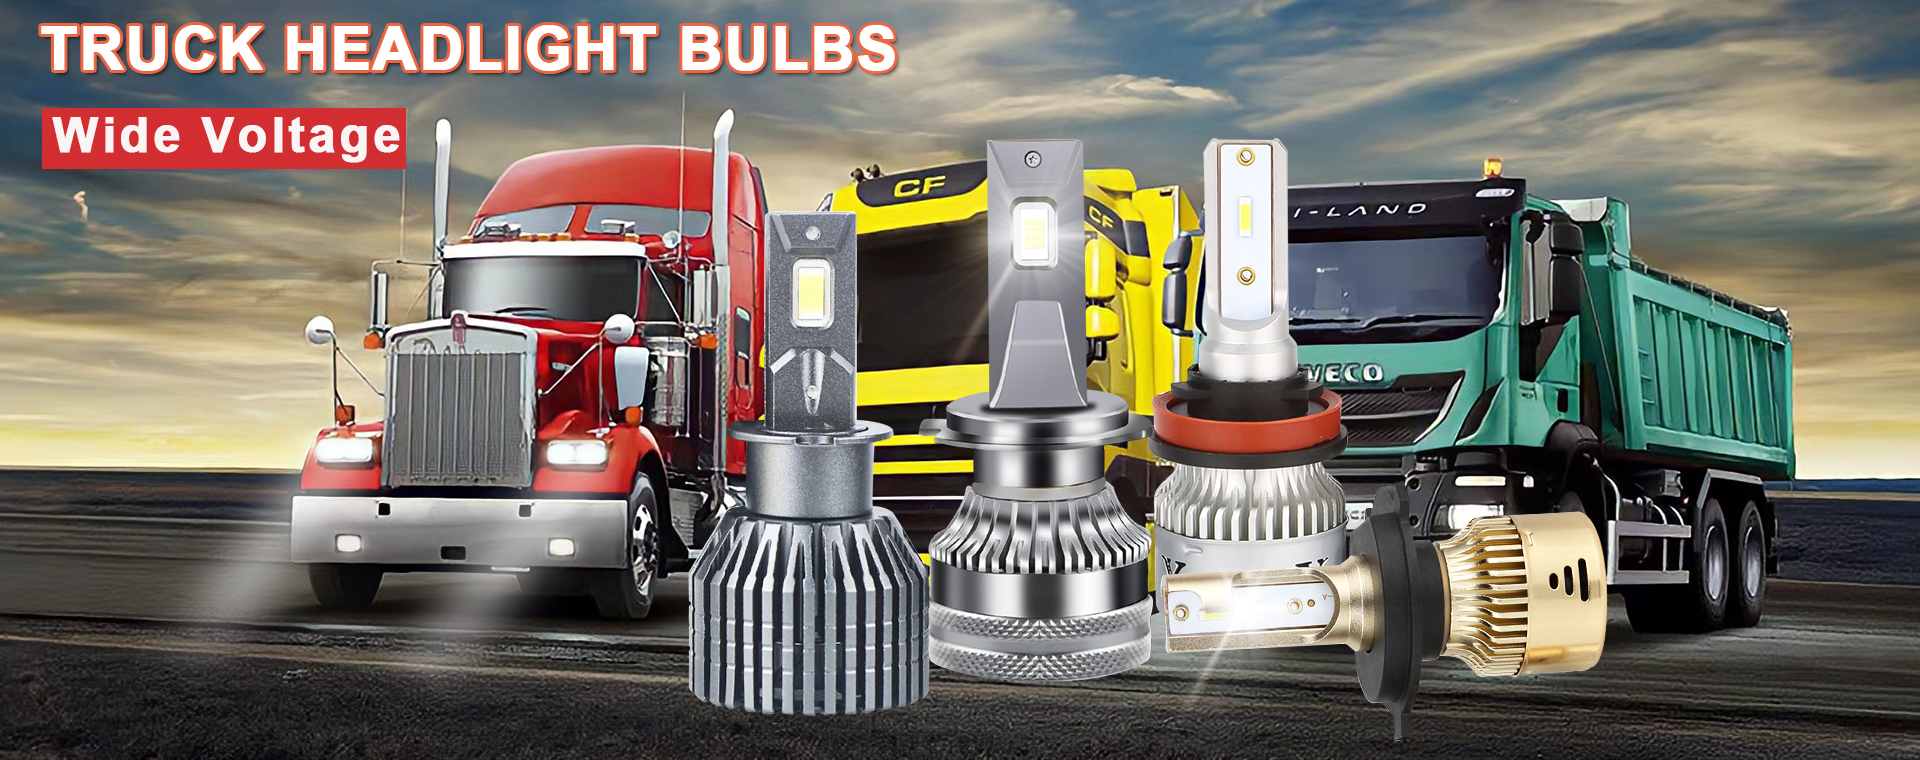 Truck LED headlight bulb